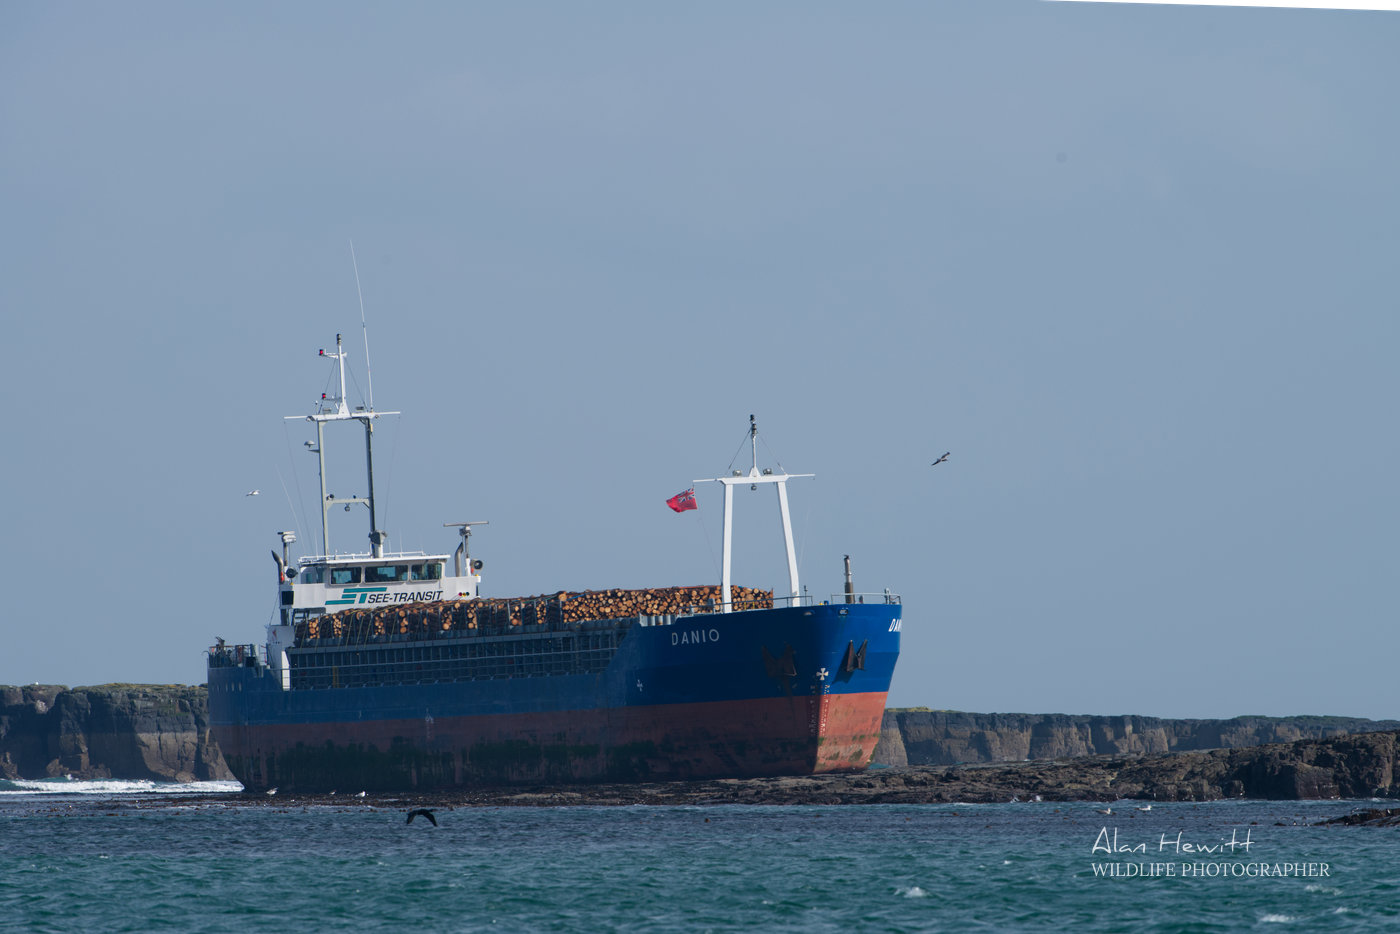 MV Danio Grounded on the Blue Caps, Farne Islands. Alan Hewitt Photography.